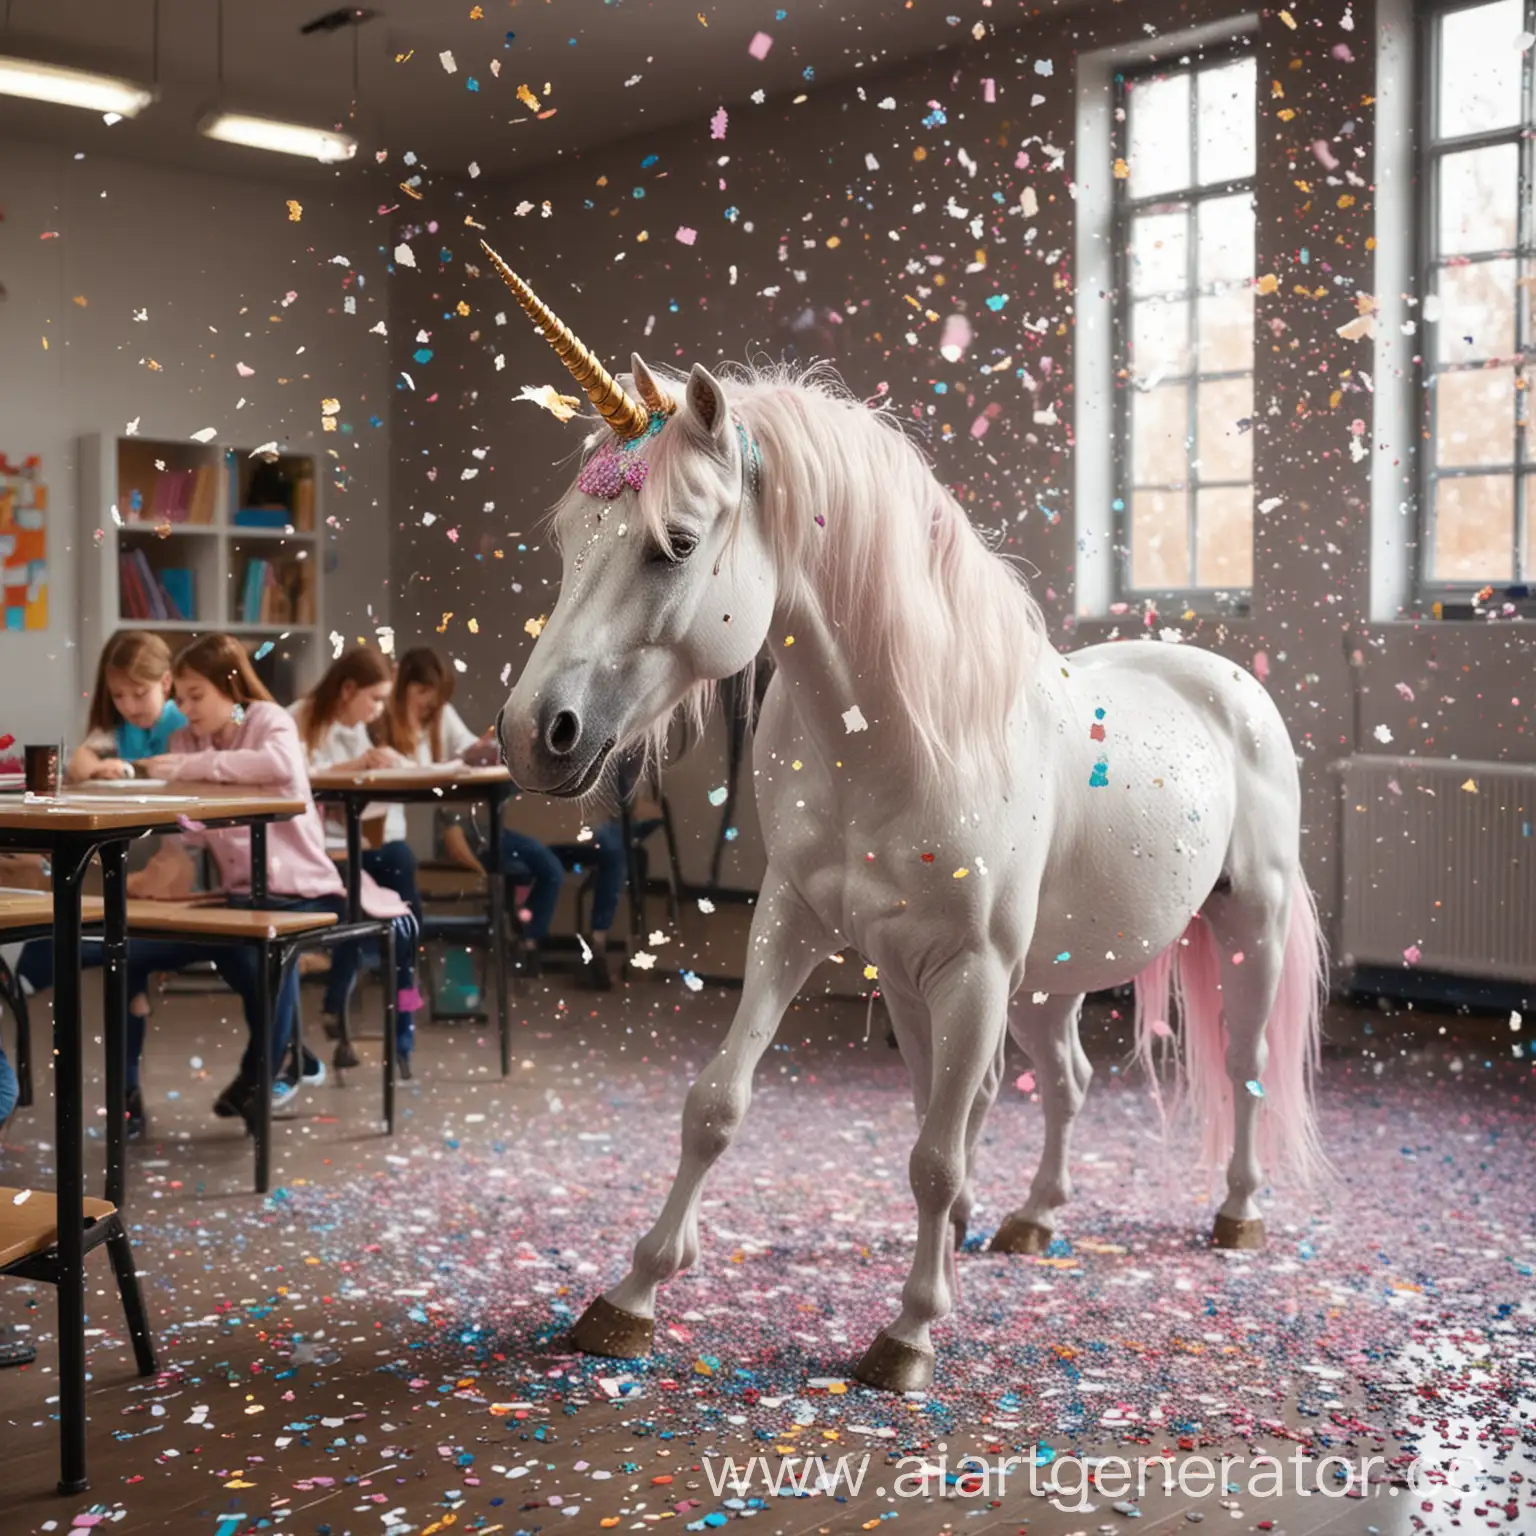 Unicorn-Scattering-Glitter-in-Classroom